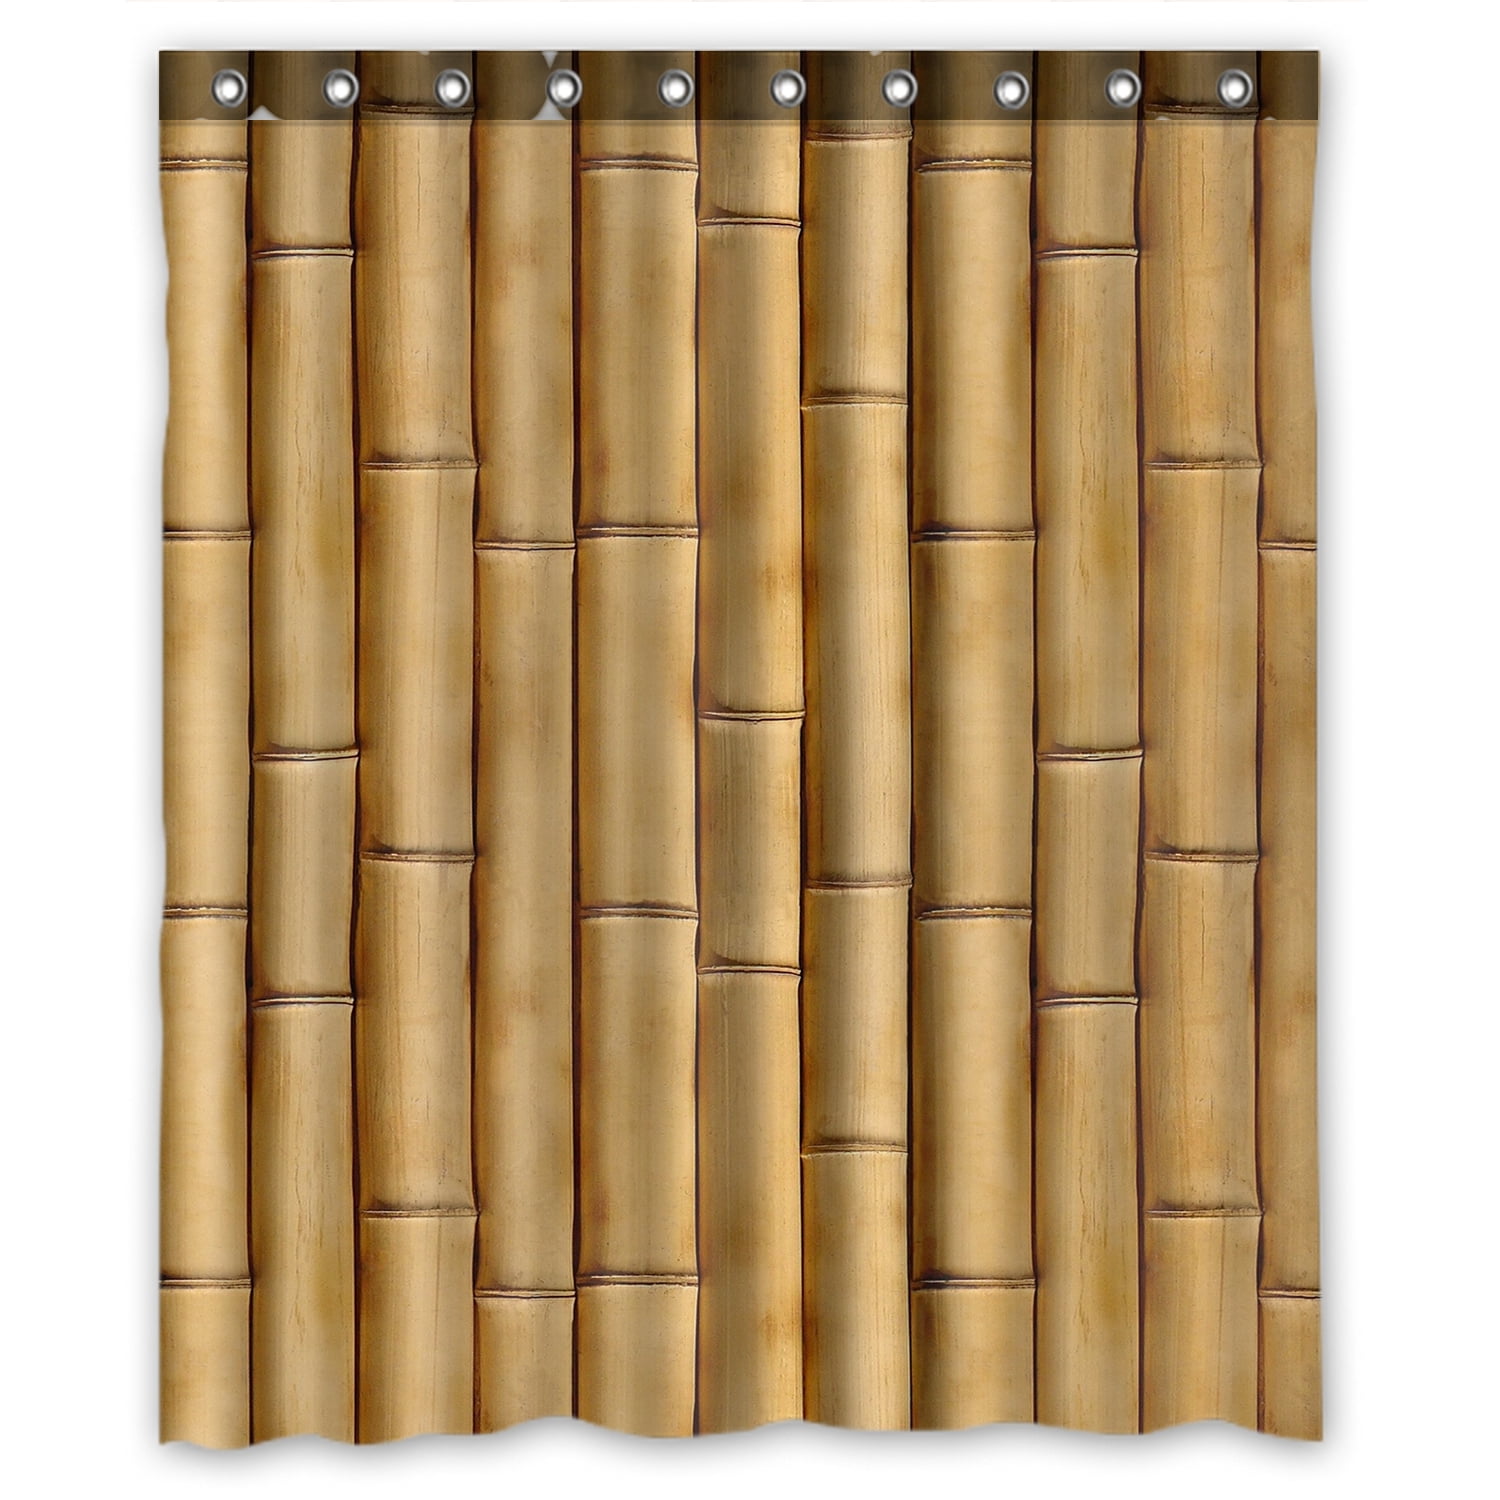 ZKGK Nature Bamboo Wall Waterproof Shower Curtain Bathroom Decor Sets ...